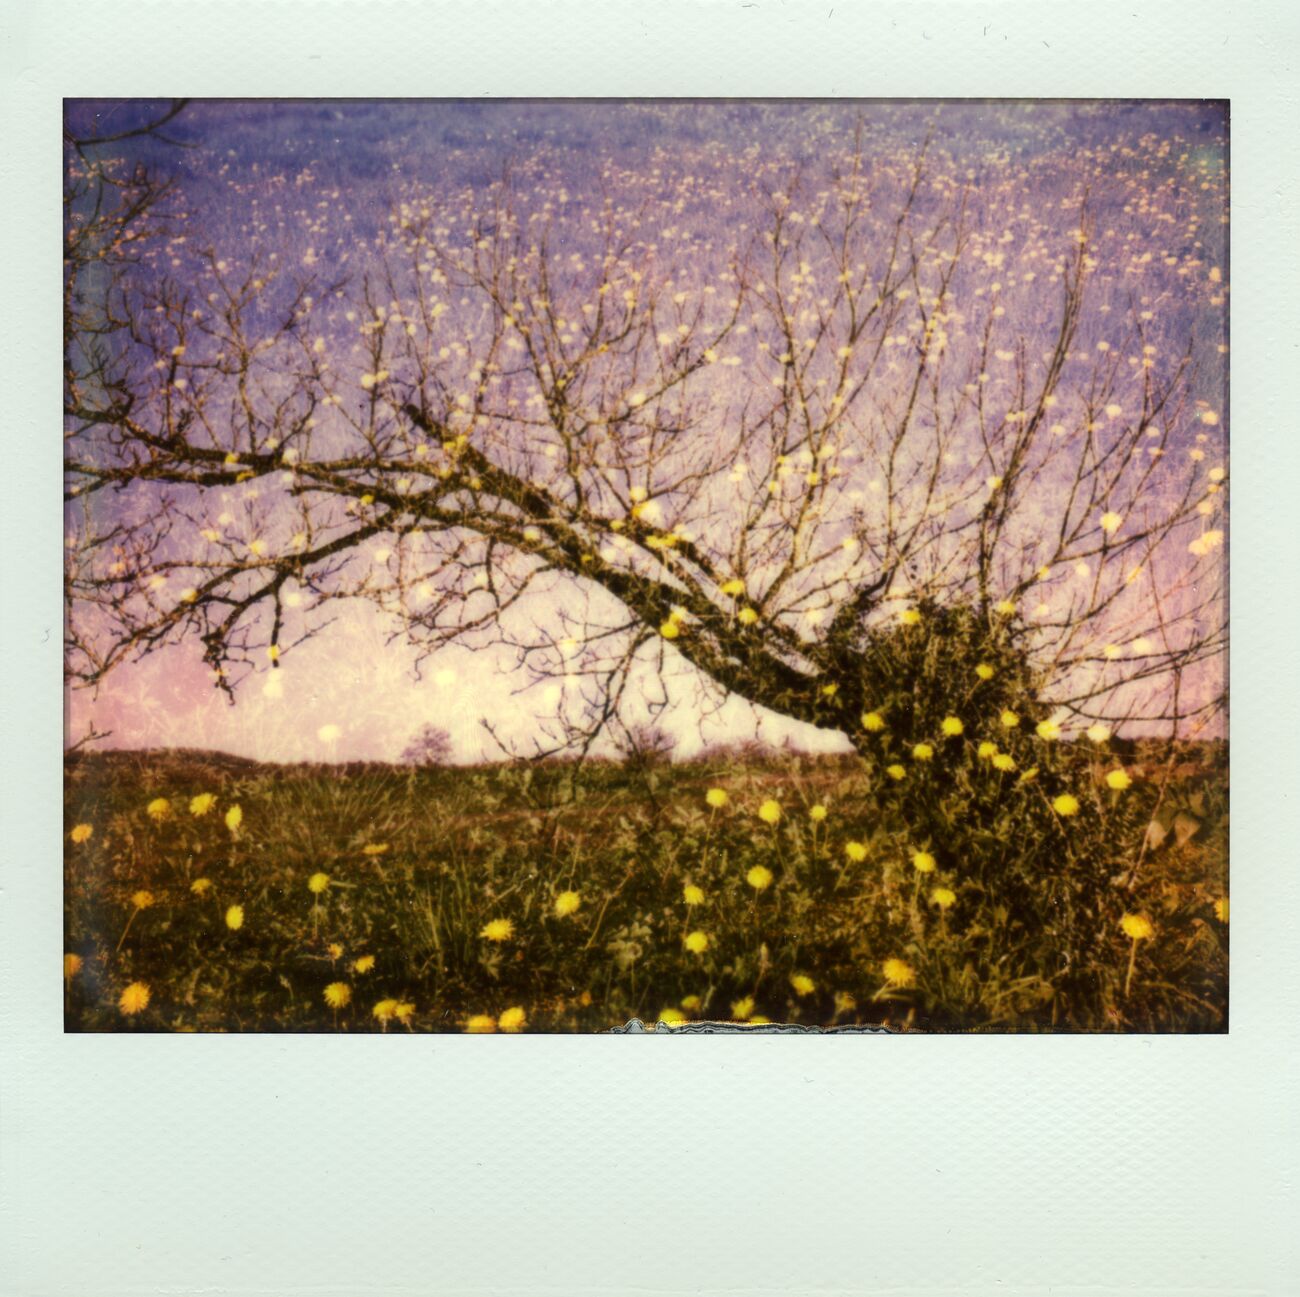 Hippie Tree, Périgord Noir, France. Avril 2015. Ref-1304 - Denis Olivier Photographie